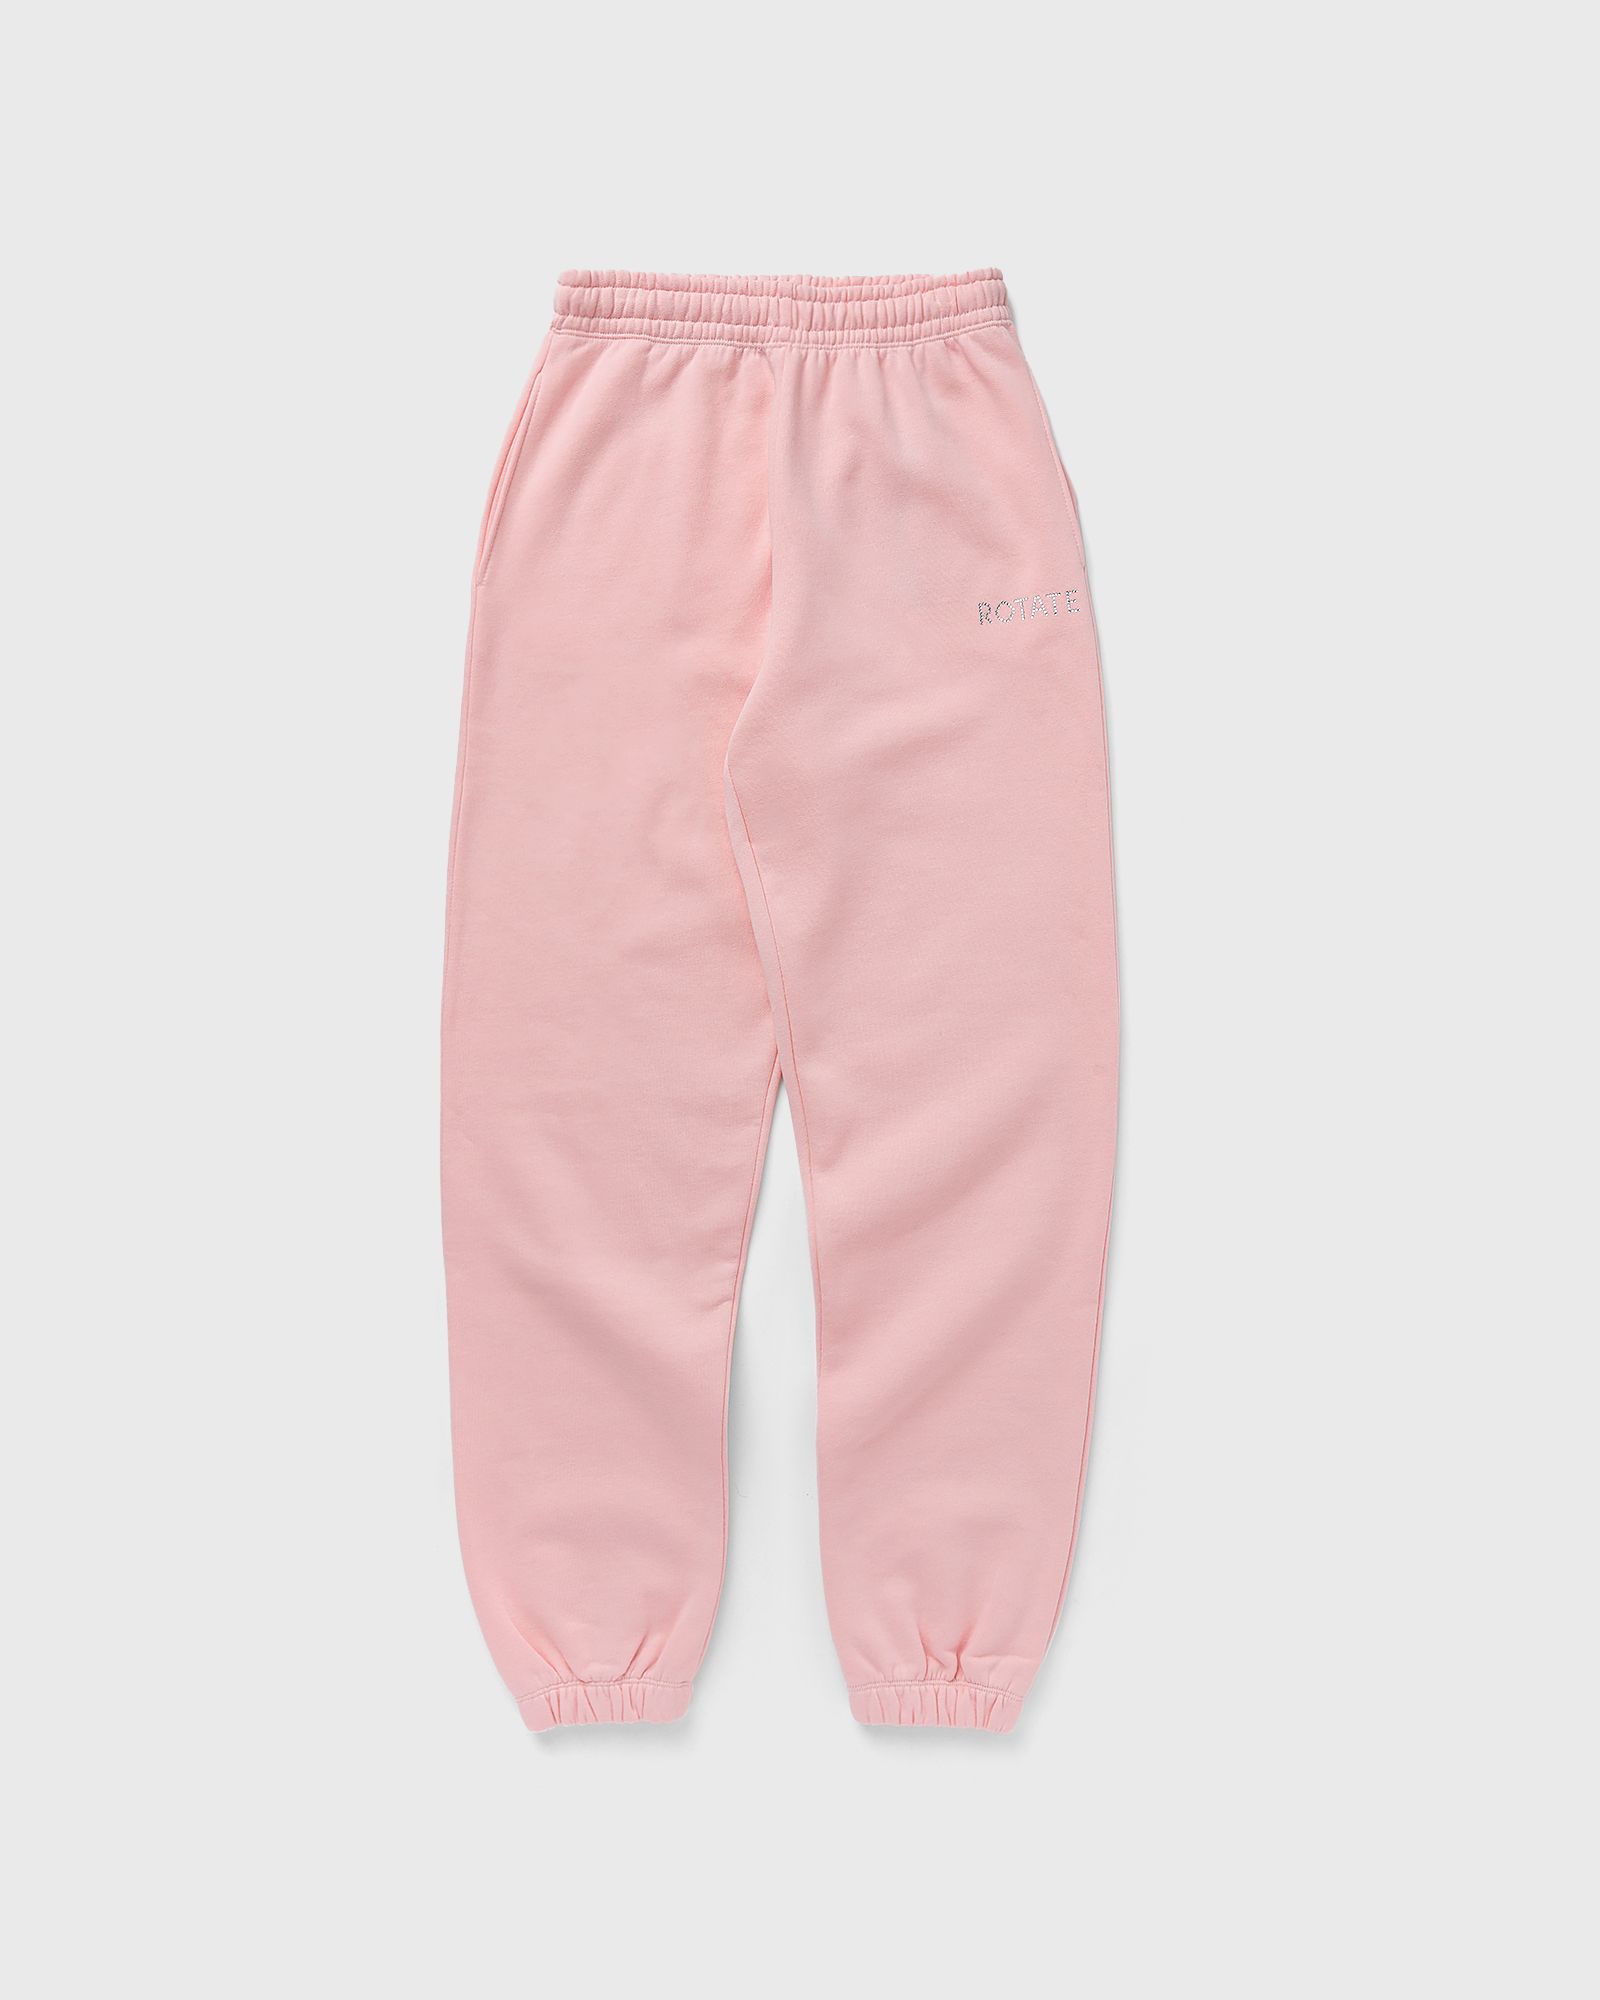 ROTATE Birger Christensen - sweatpants crystal logo women sweatpants pink in größe:m